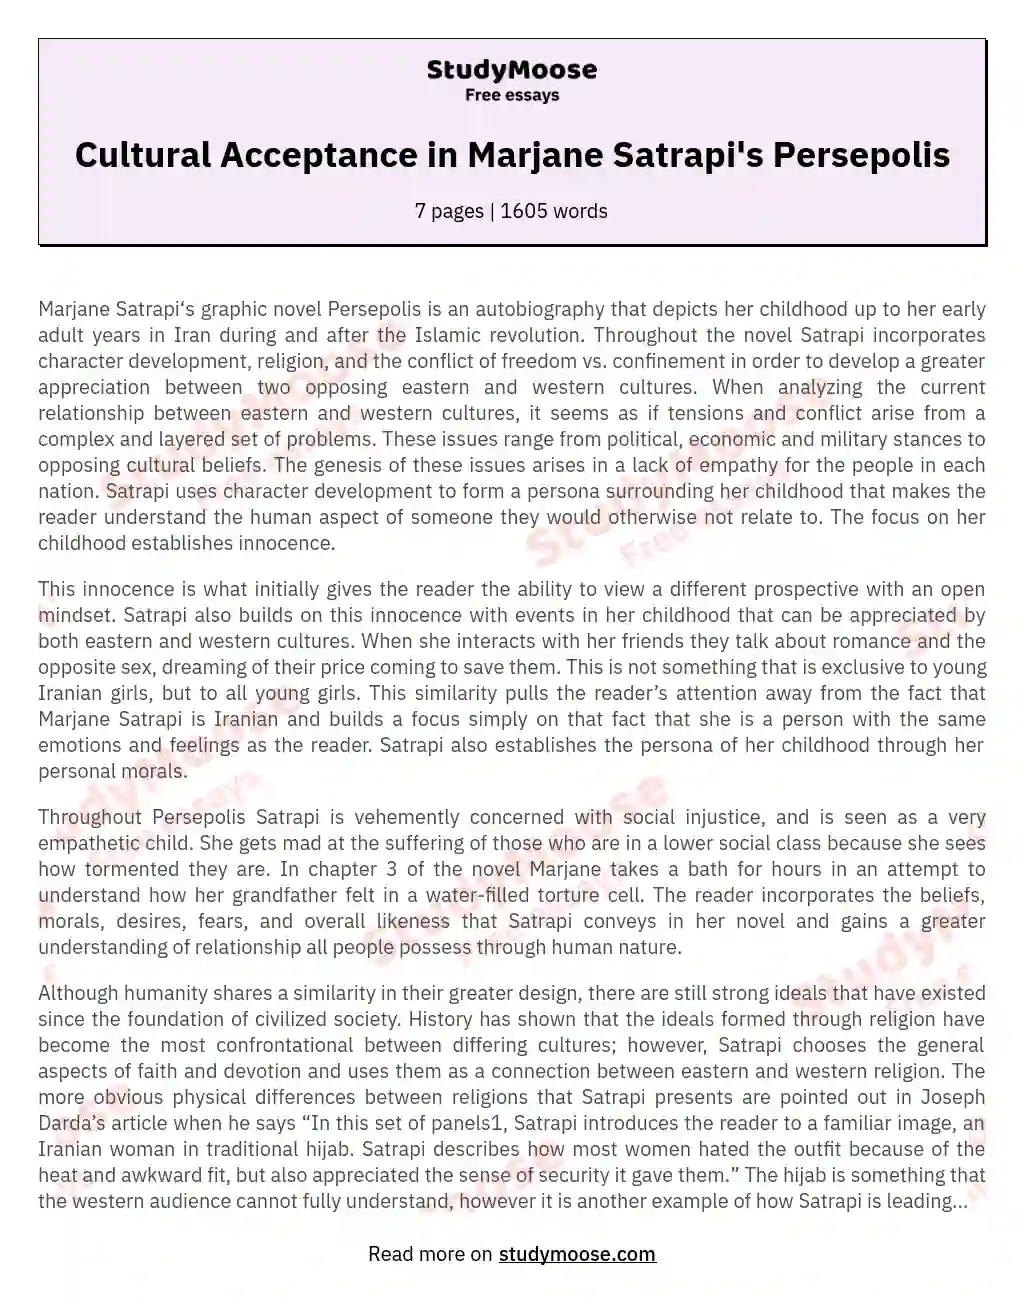 Cultural Acceptance in Marjane Satrapi's Persepolis